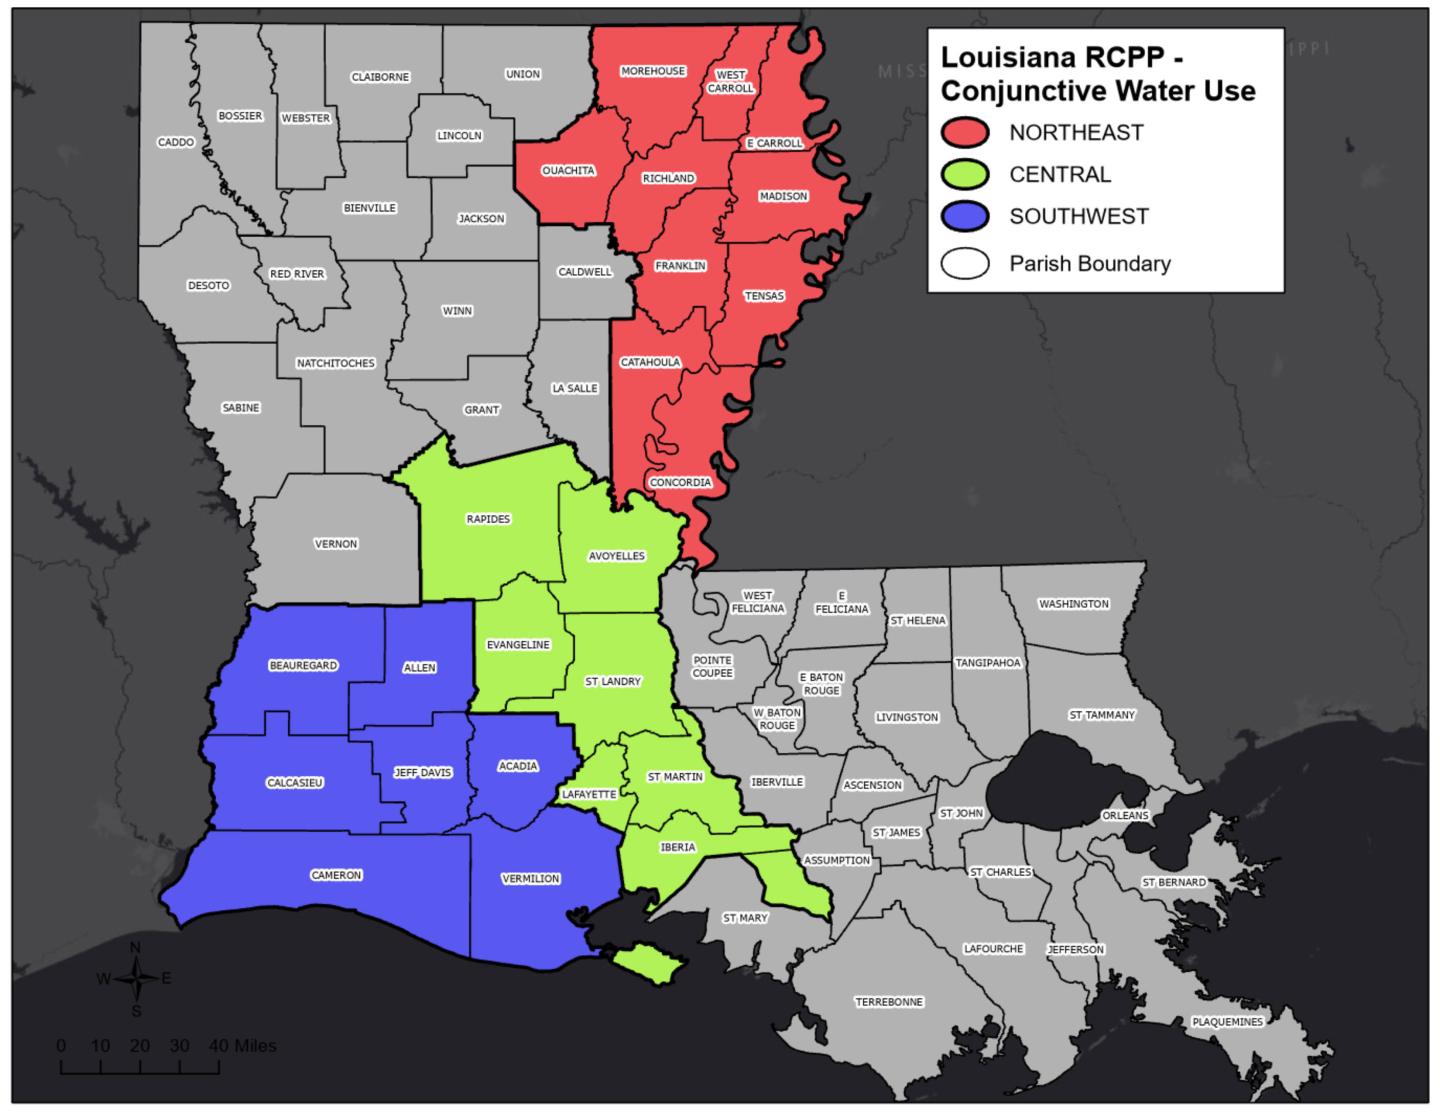 Louisiana RCPP Conjunctive Water Use